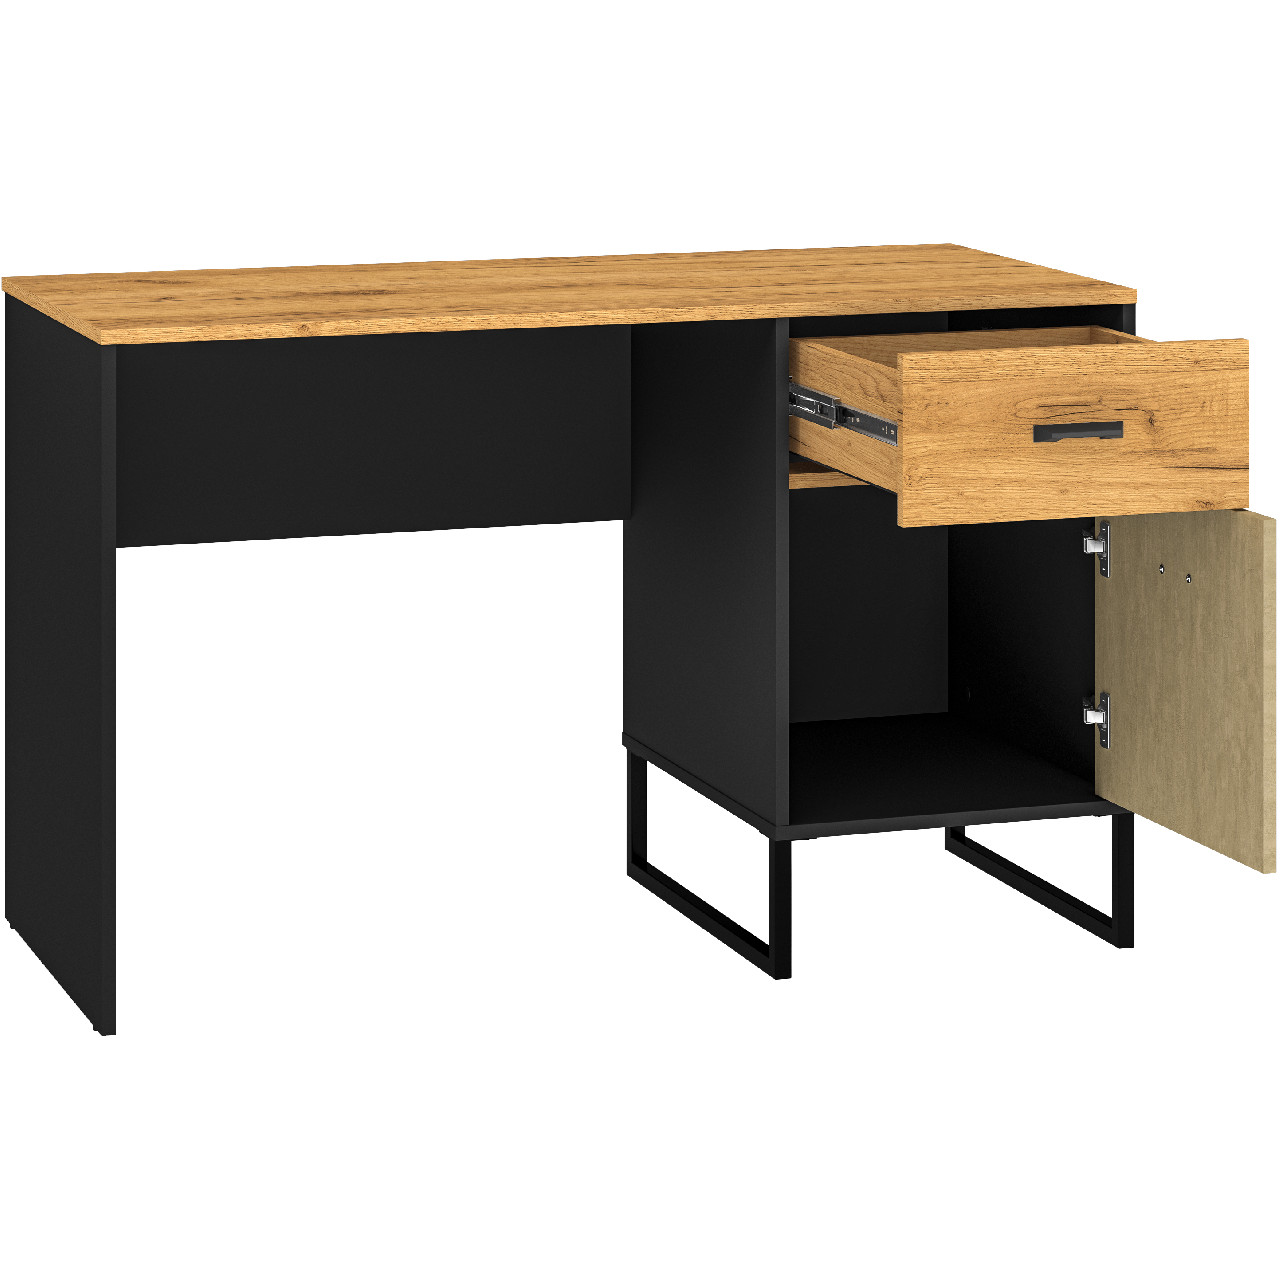 Desk CLINT 07 gold craft oak / black